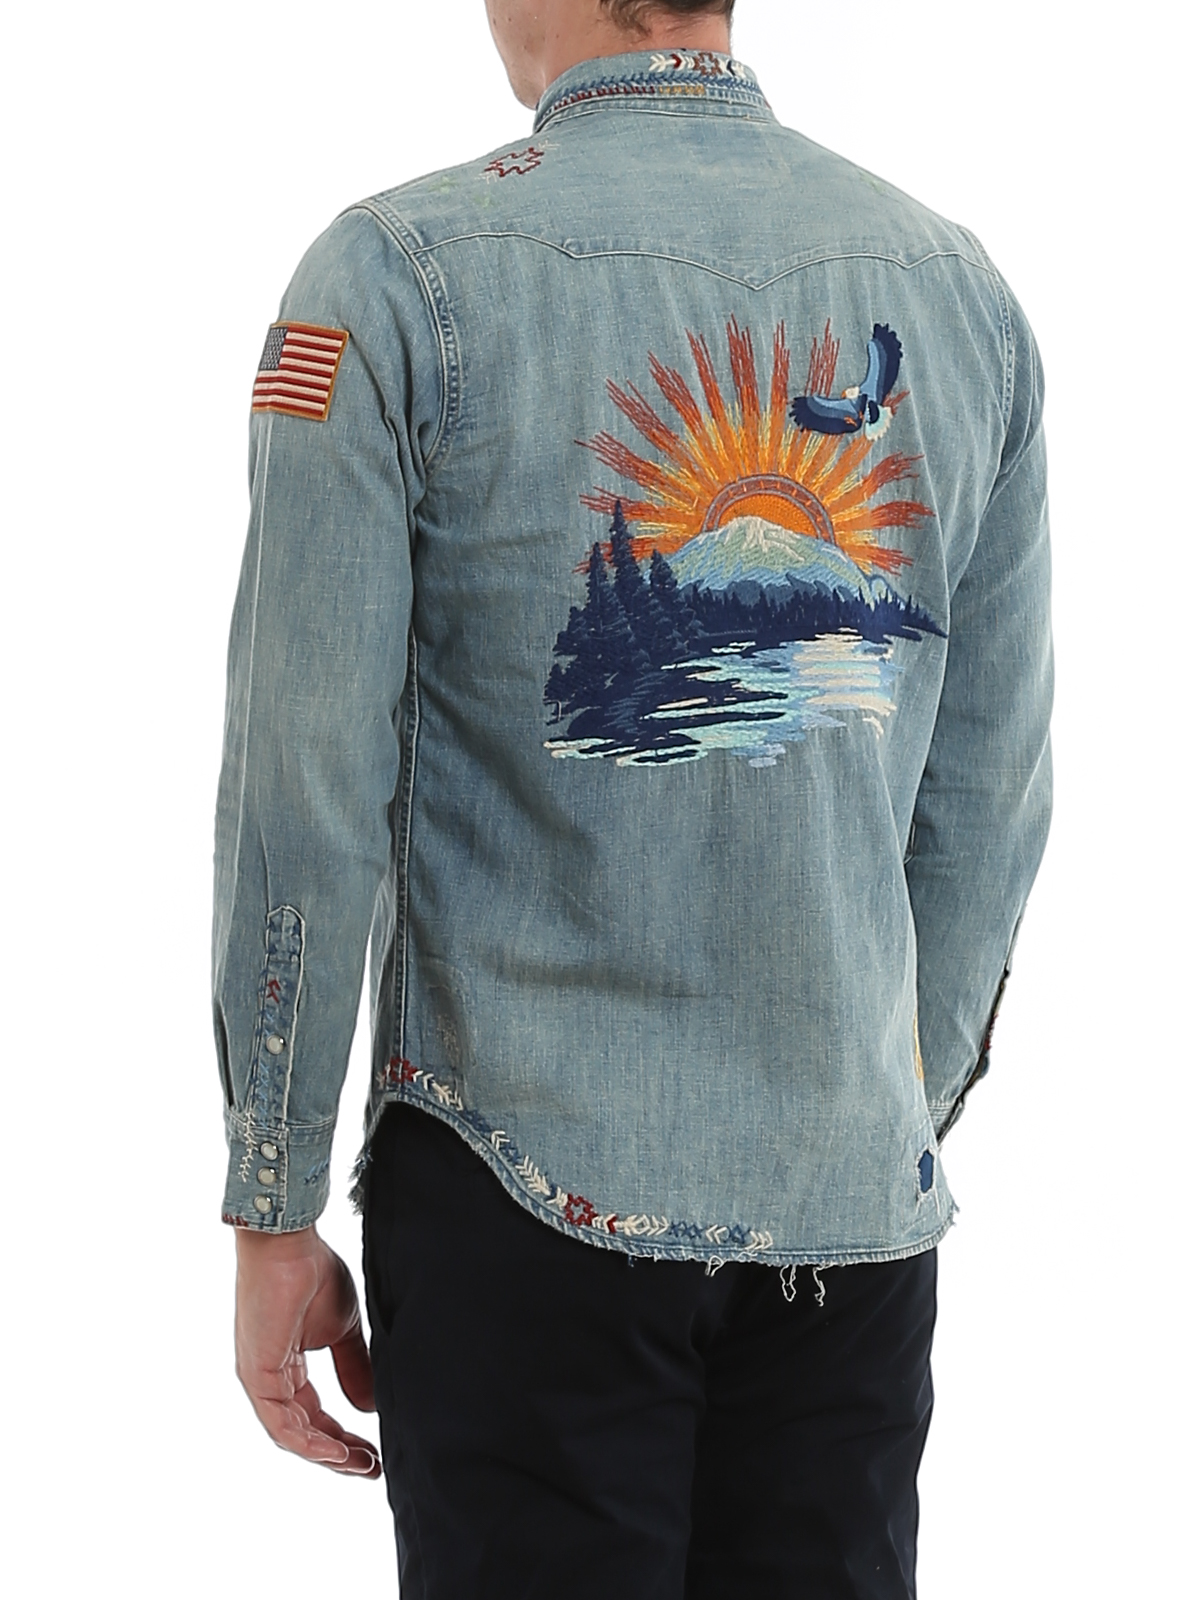 Shirts Polo Ralph Lauren - Western embroidery denim shirt - 710786275001